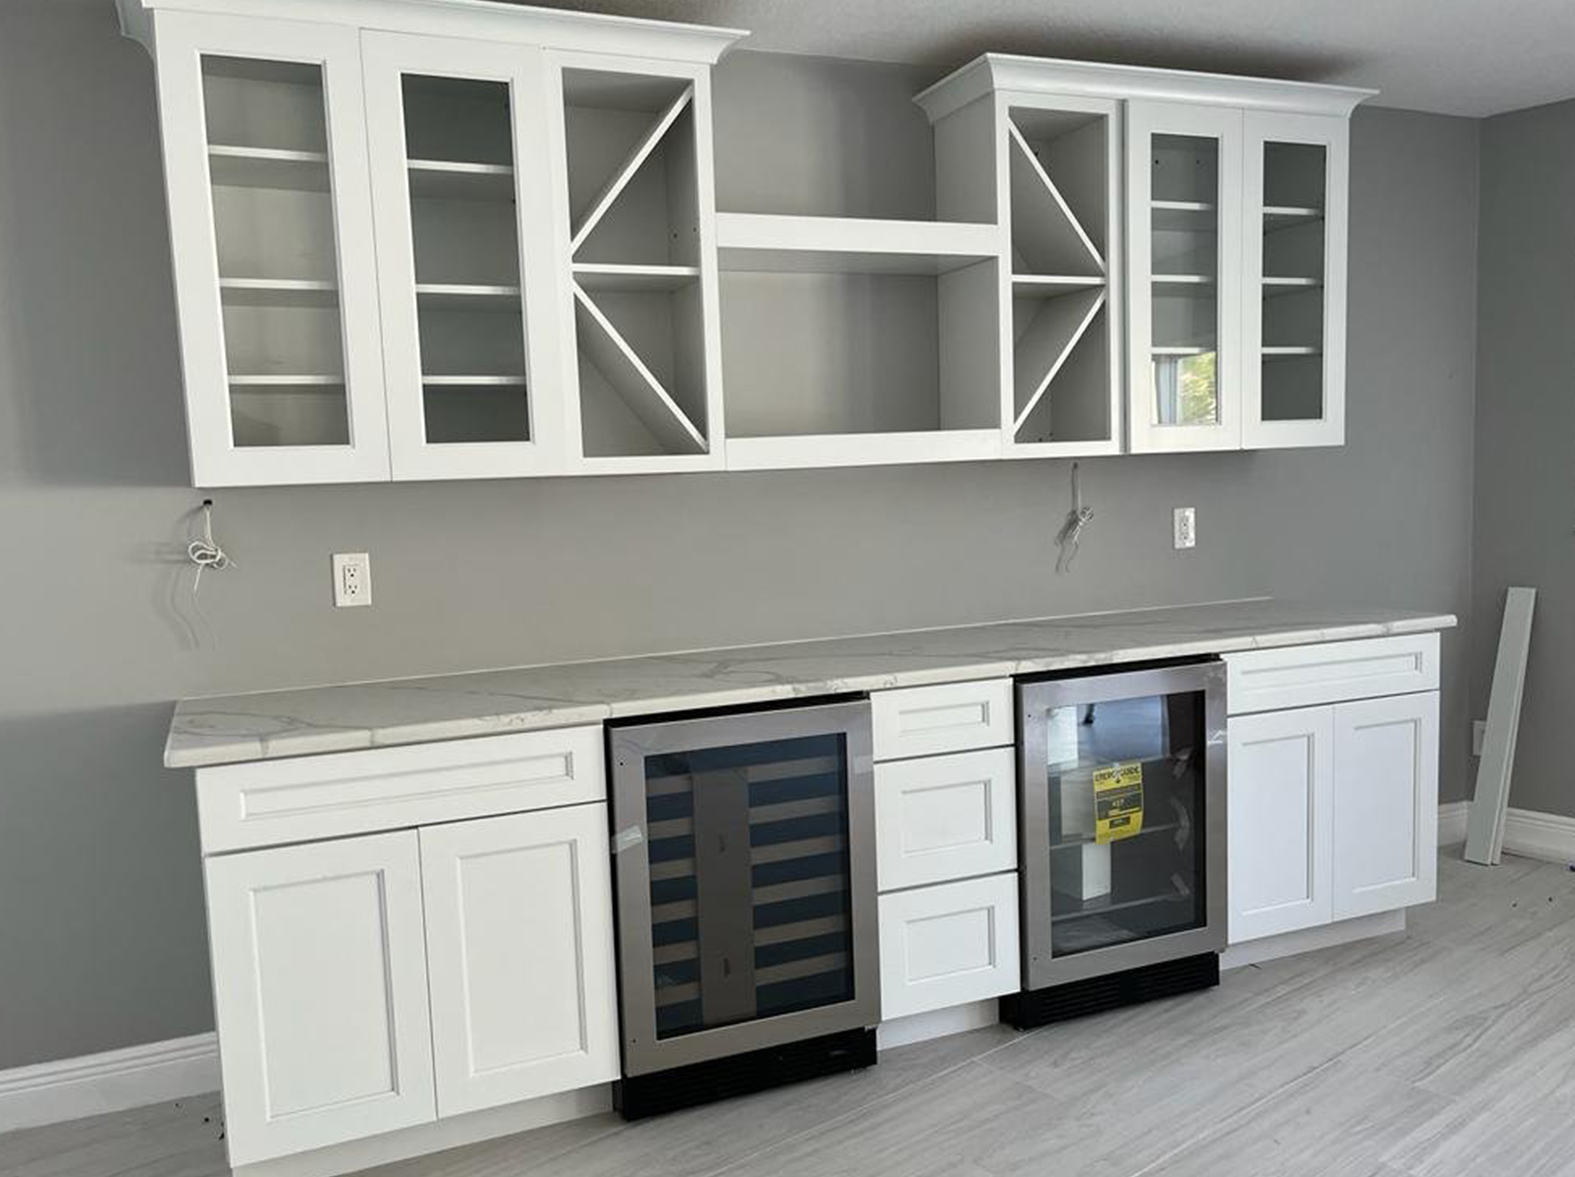 kitchen granite countertops and cabinets